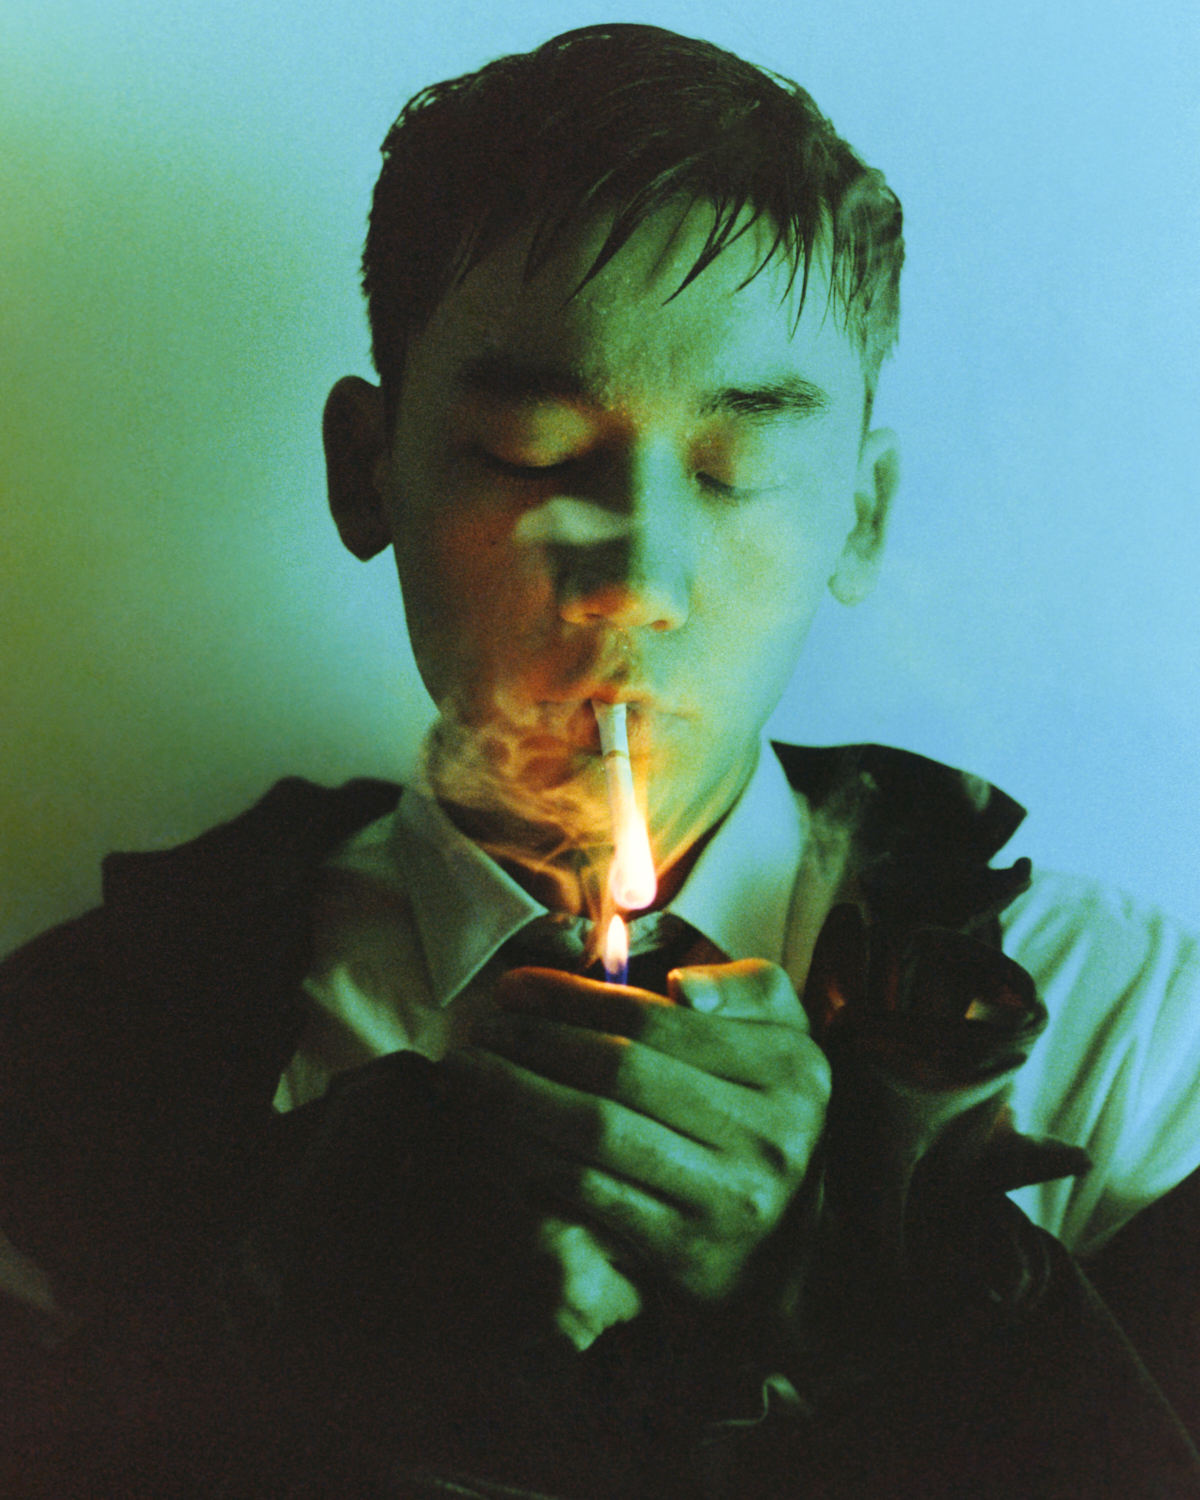 a man lights a cigarette under blue coloured light